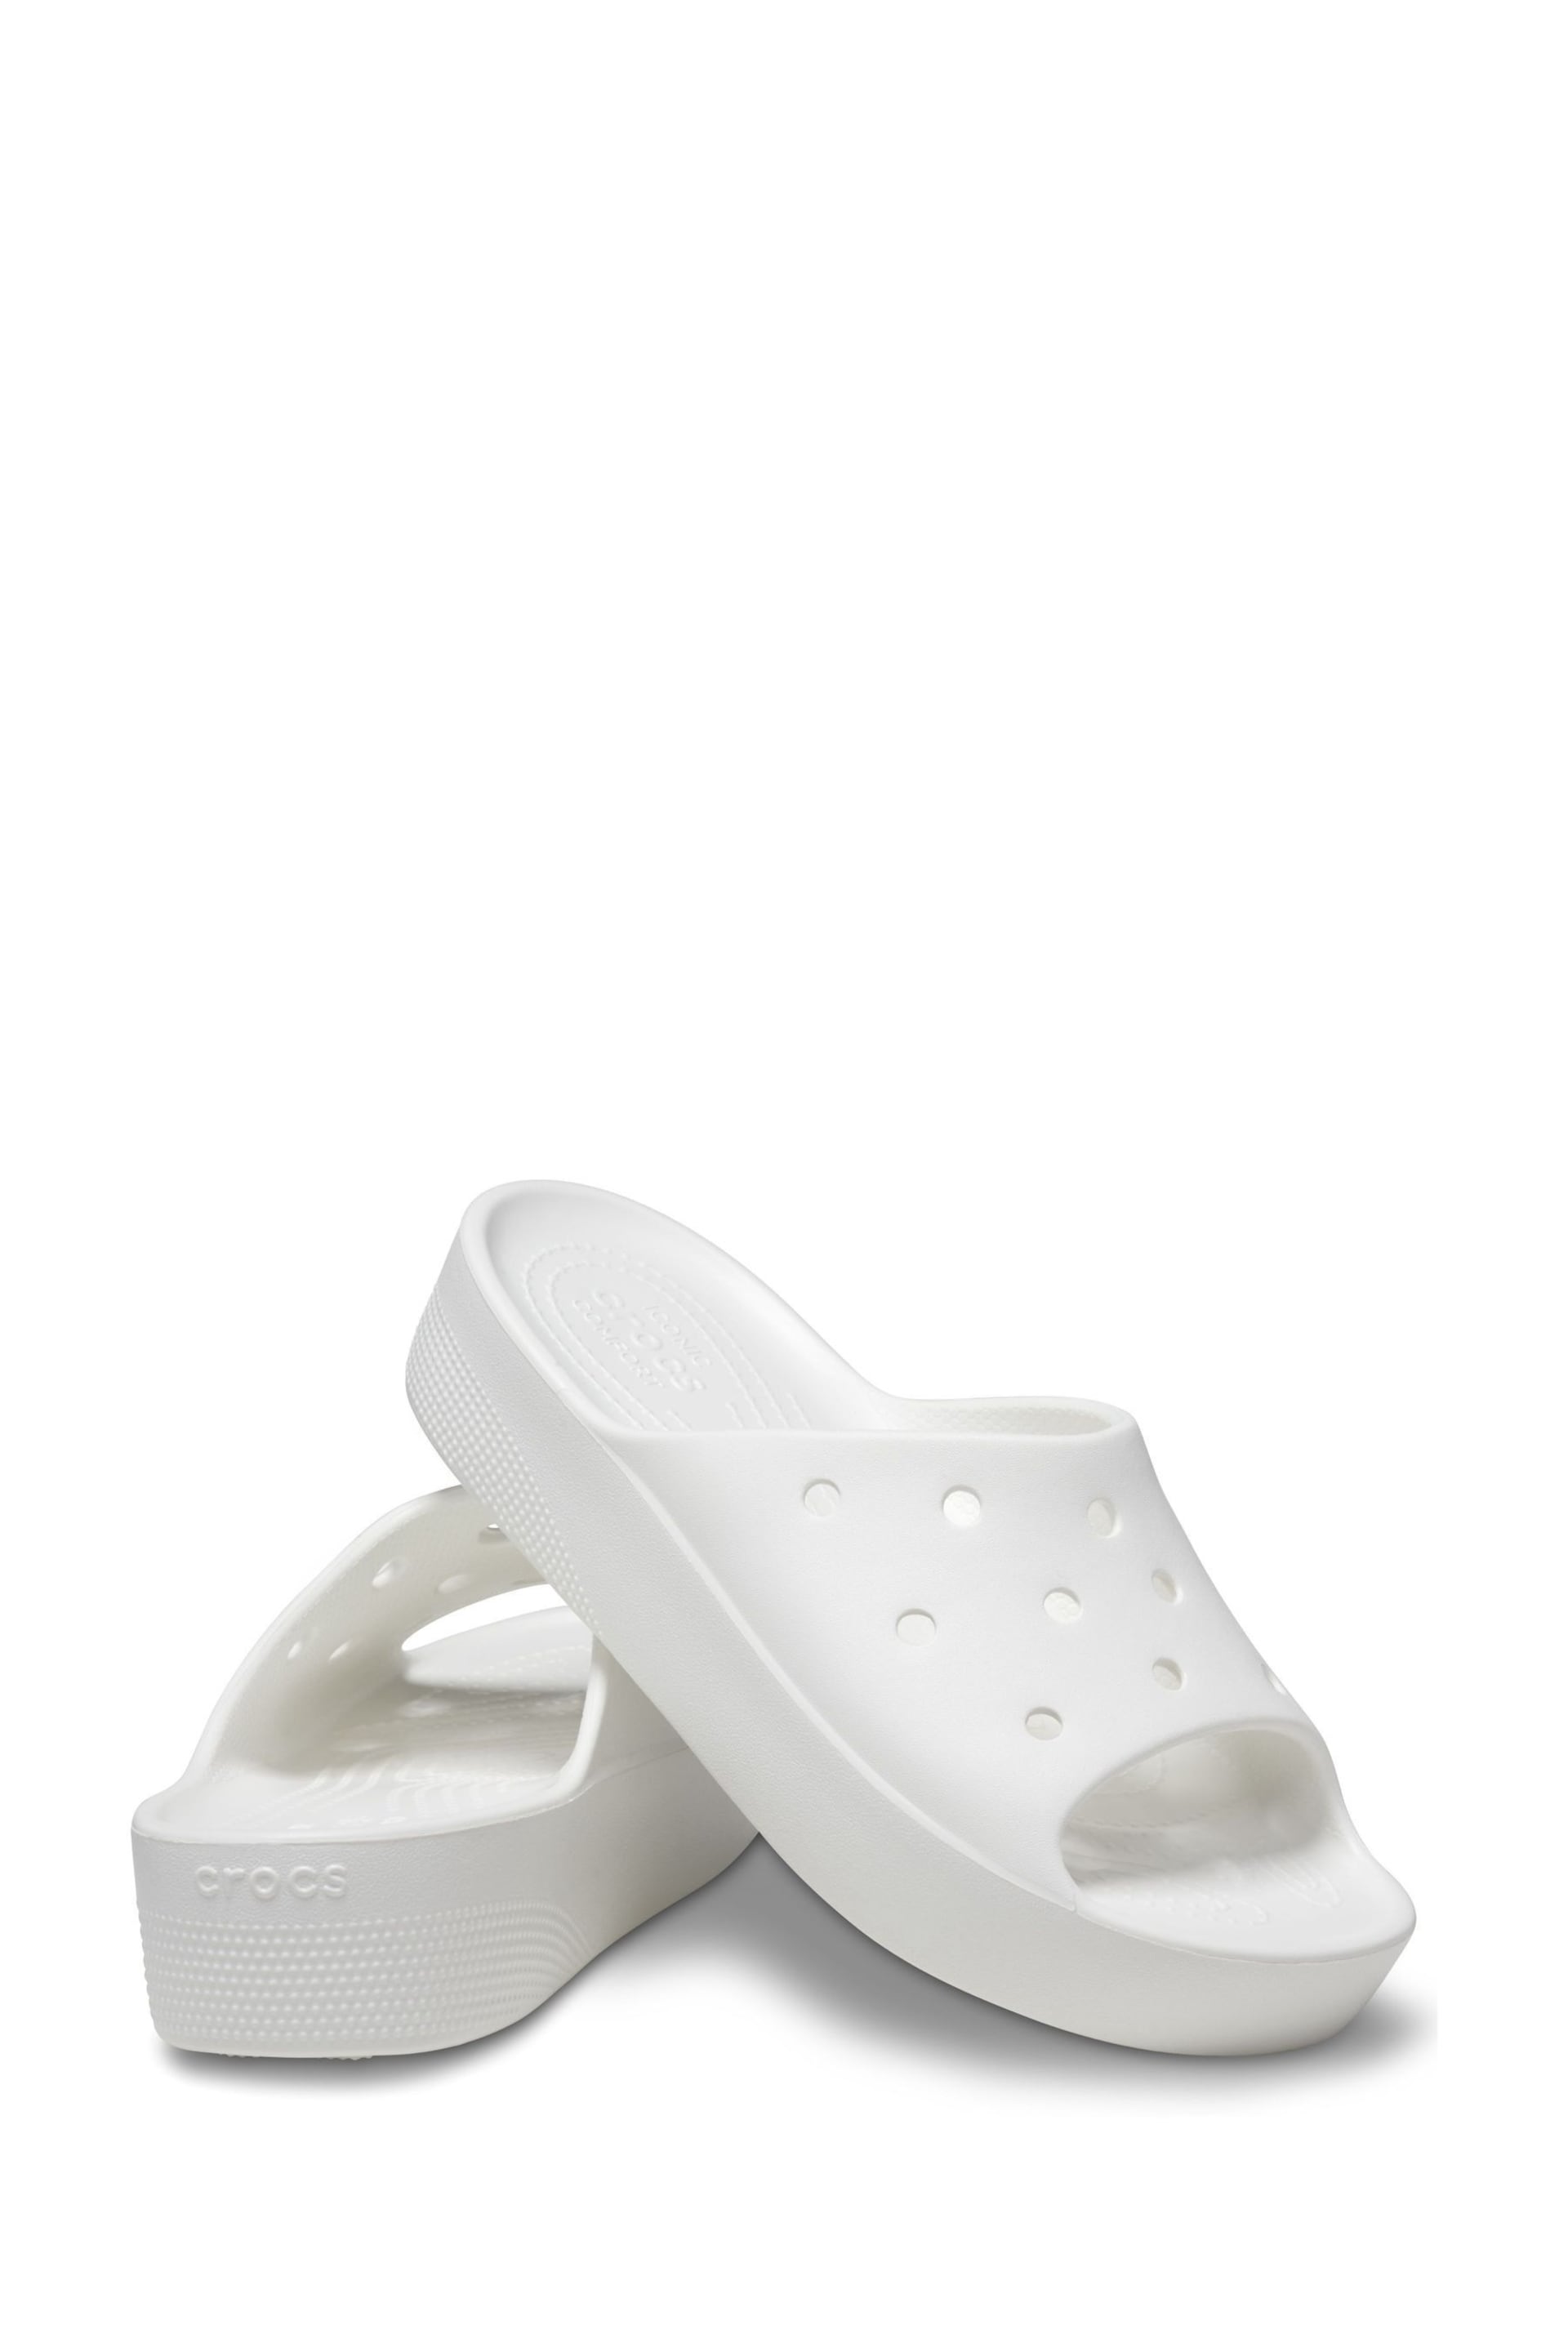 Crocs Classic Platform Slide Sandals - Image 6 of 7